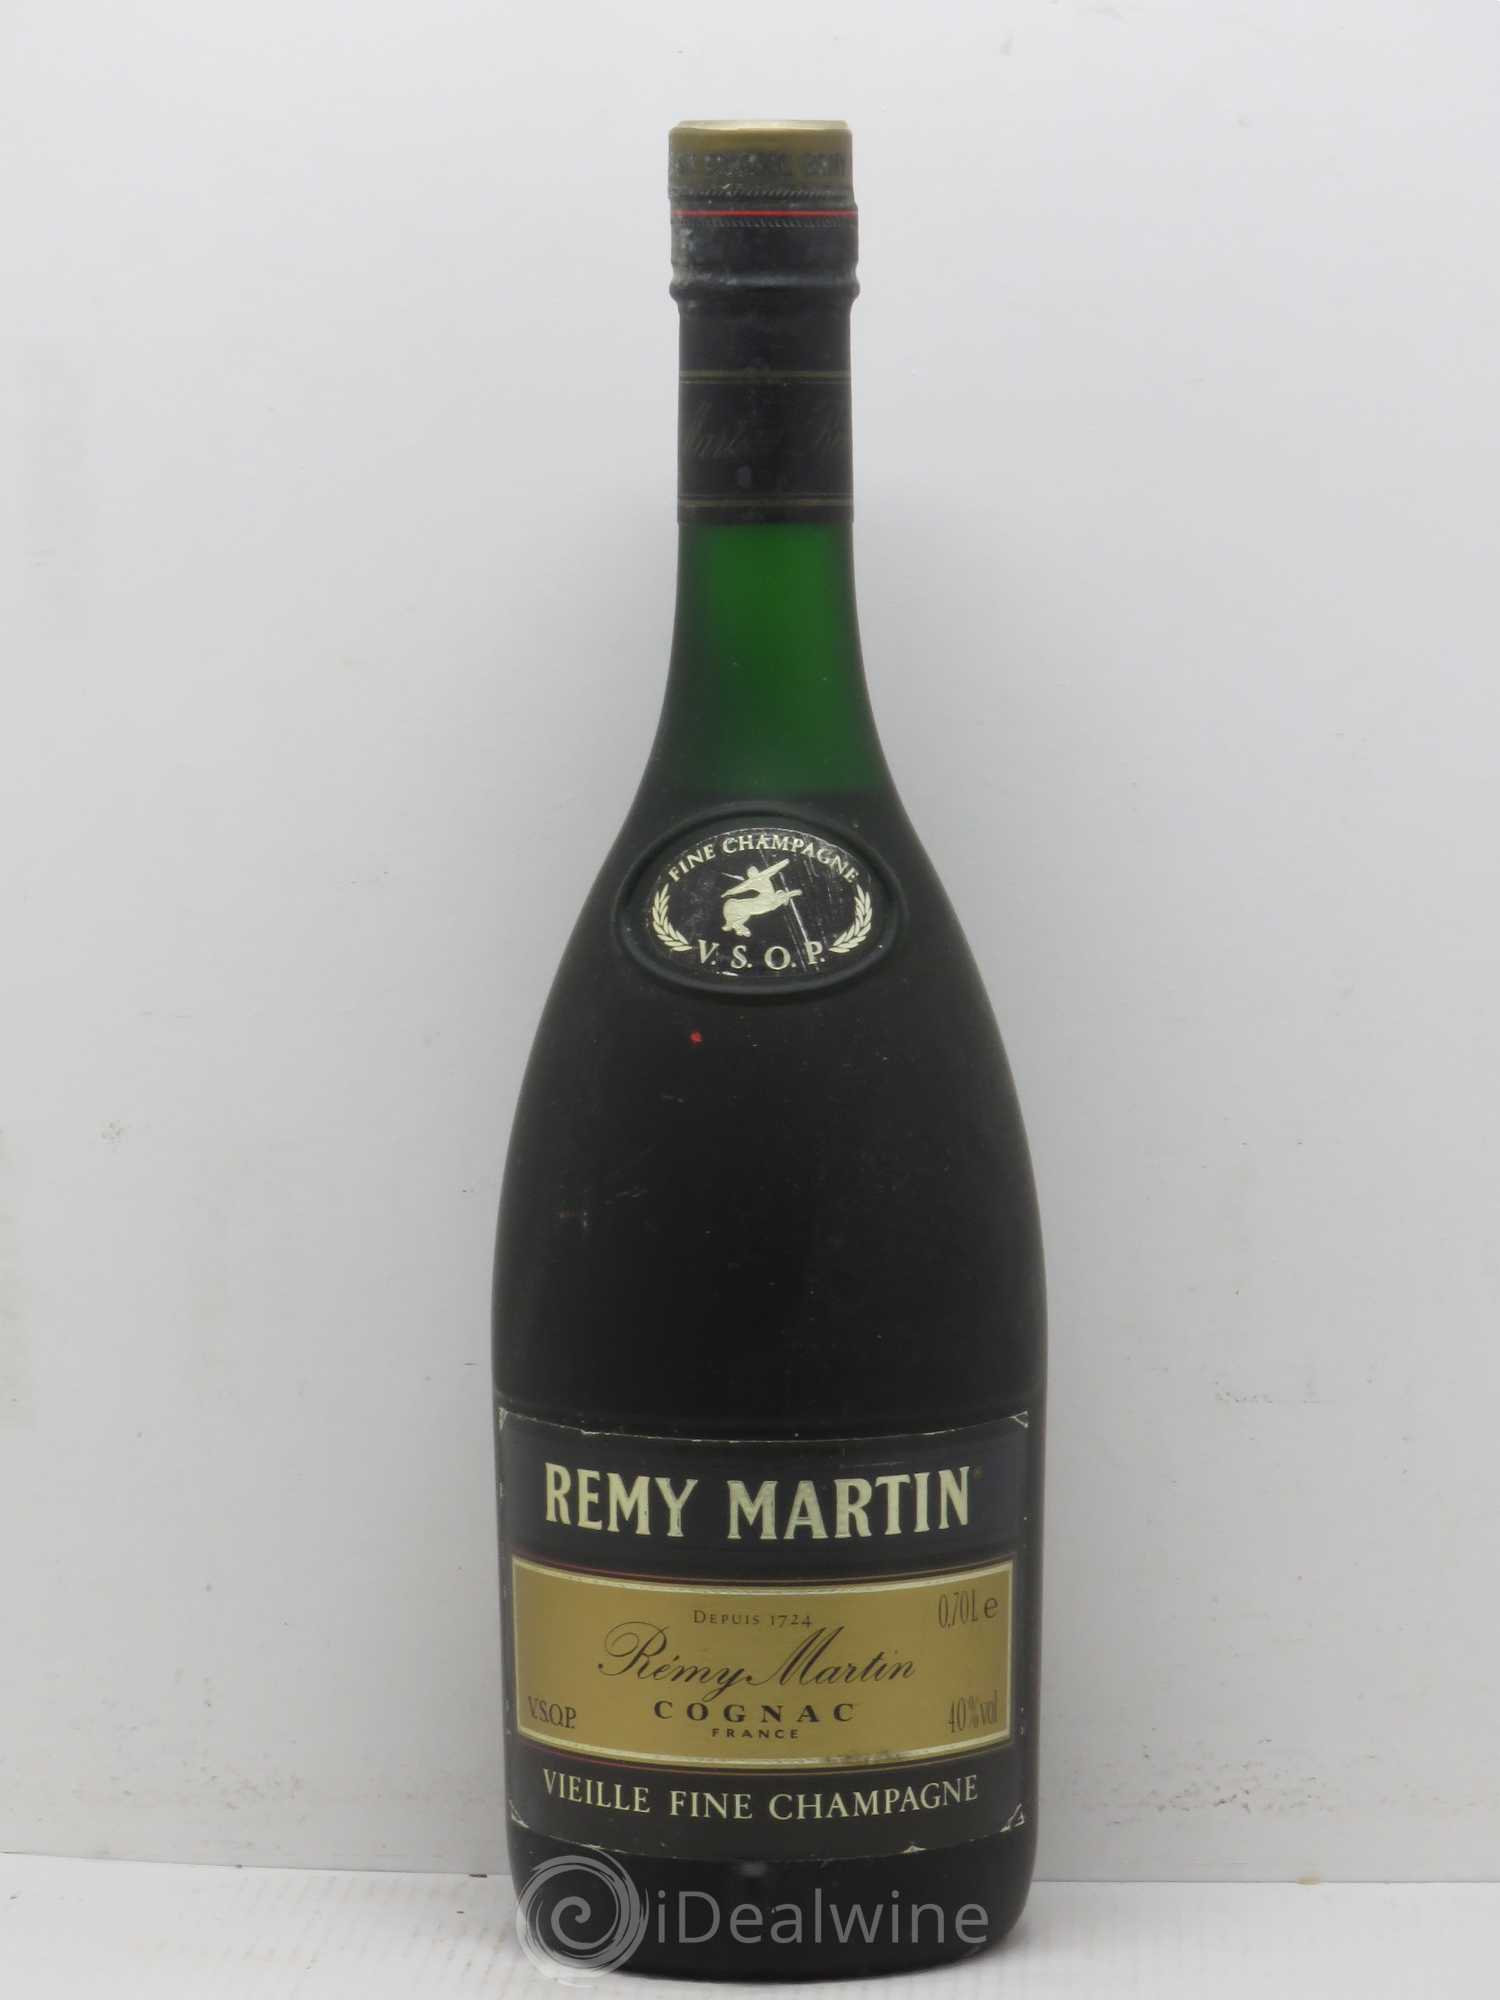 Remy Martin Fine Champagne Cognac VSOP. Remy Martin v.s.o.p. St Remy VSOP Fine Champagne Cognac.